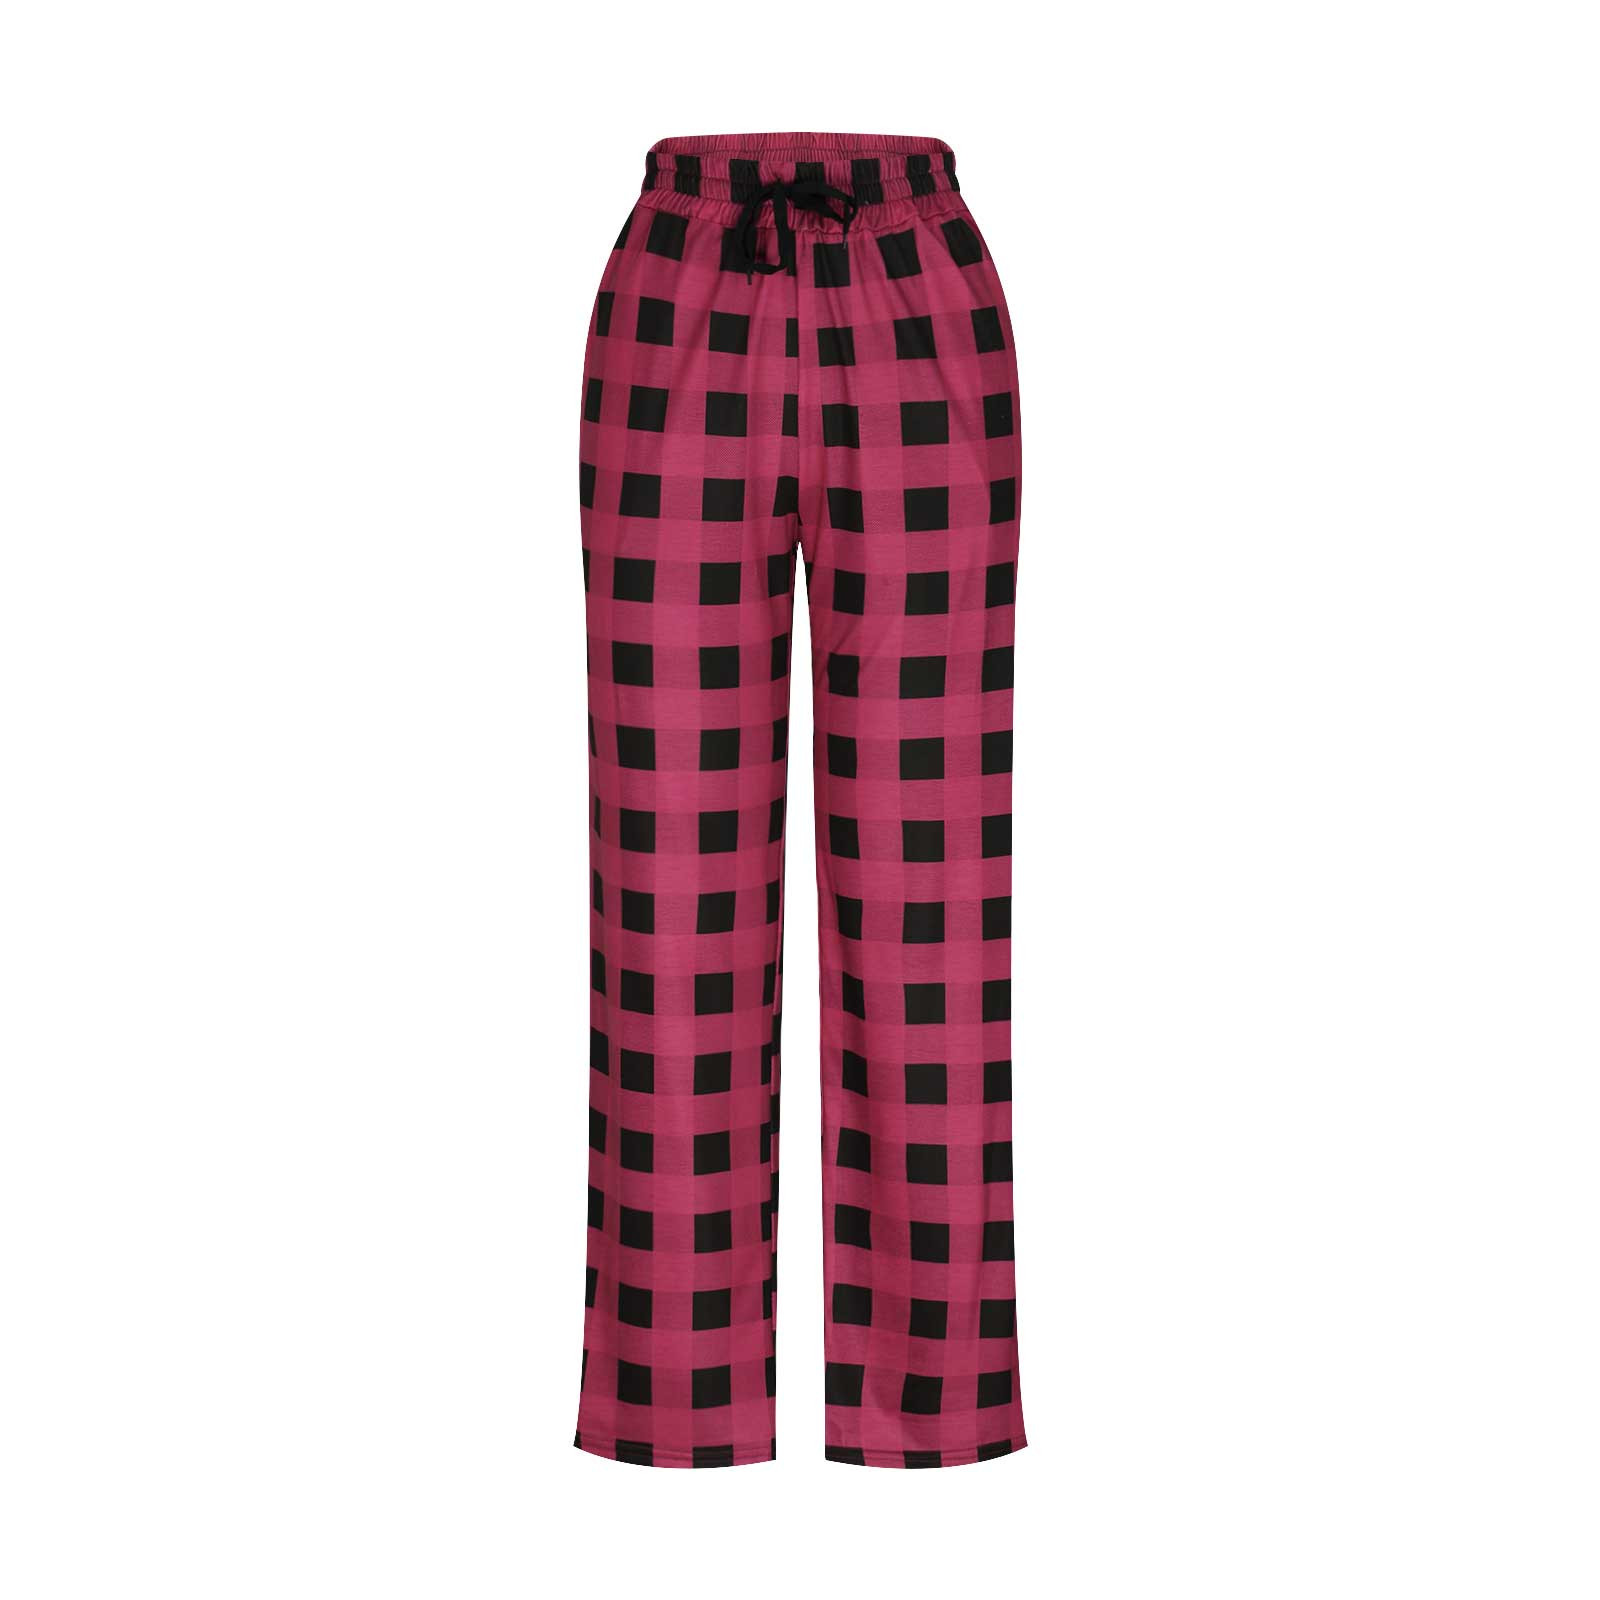 Men's Pajama Pants - Knit Cotton Flannel Plaid Lounge Bottoms Pajama ...